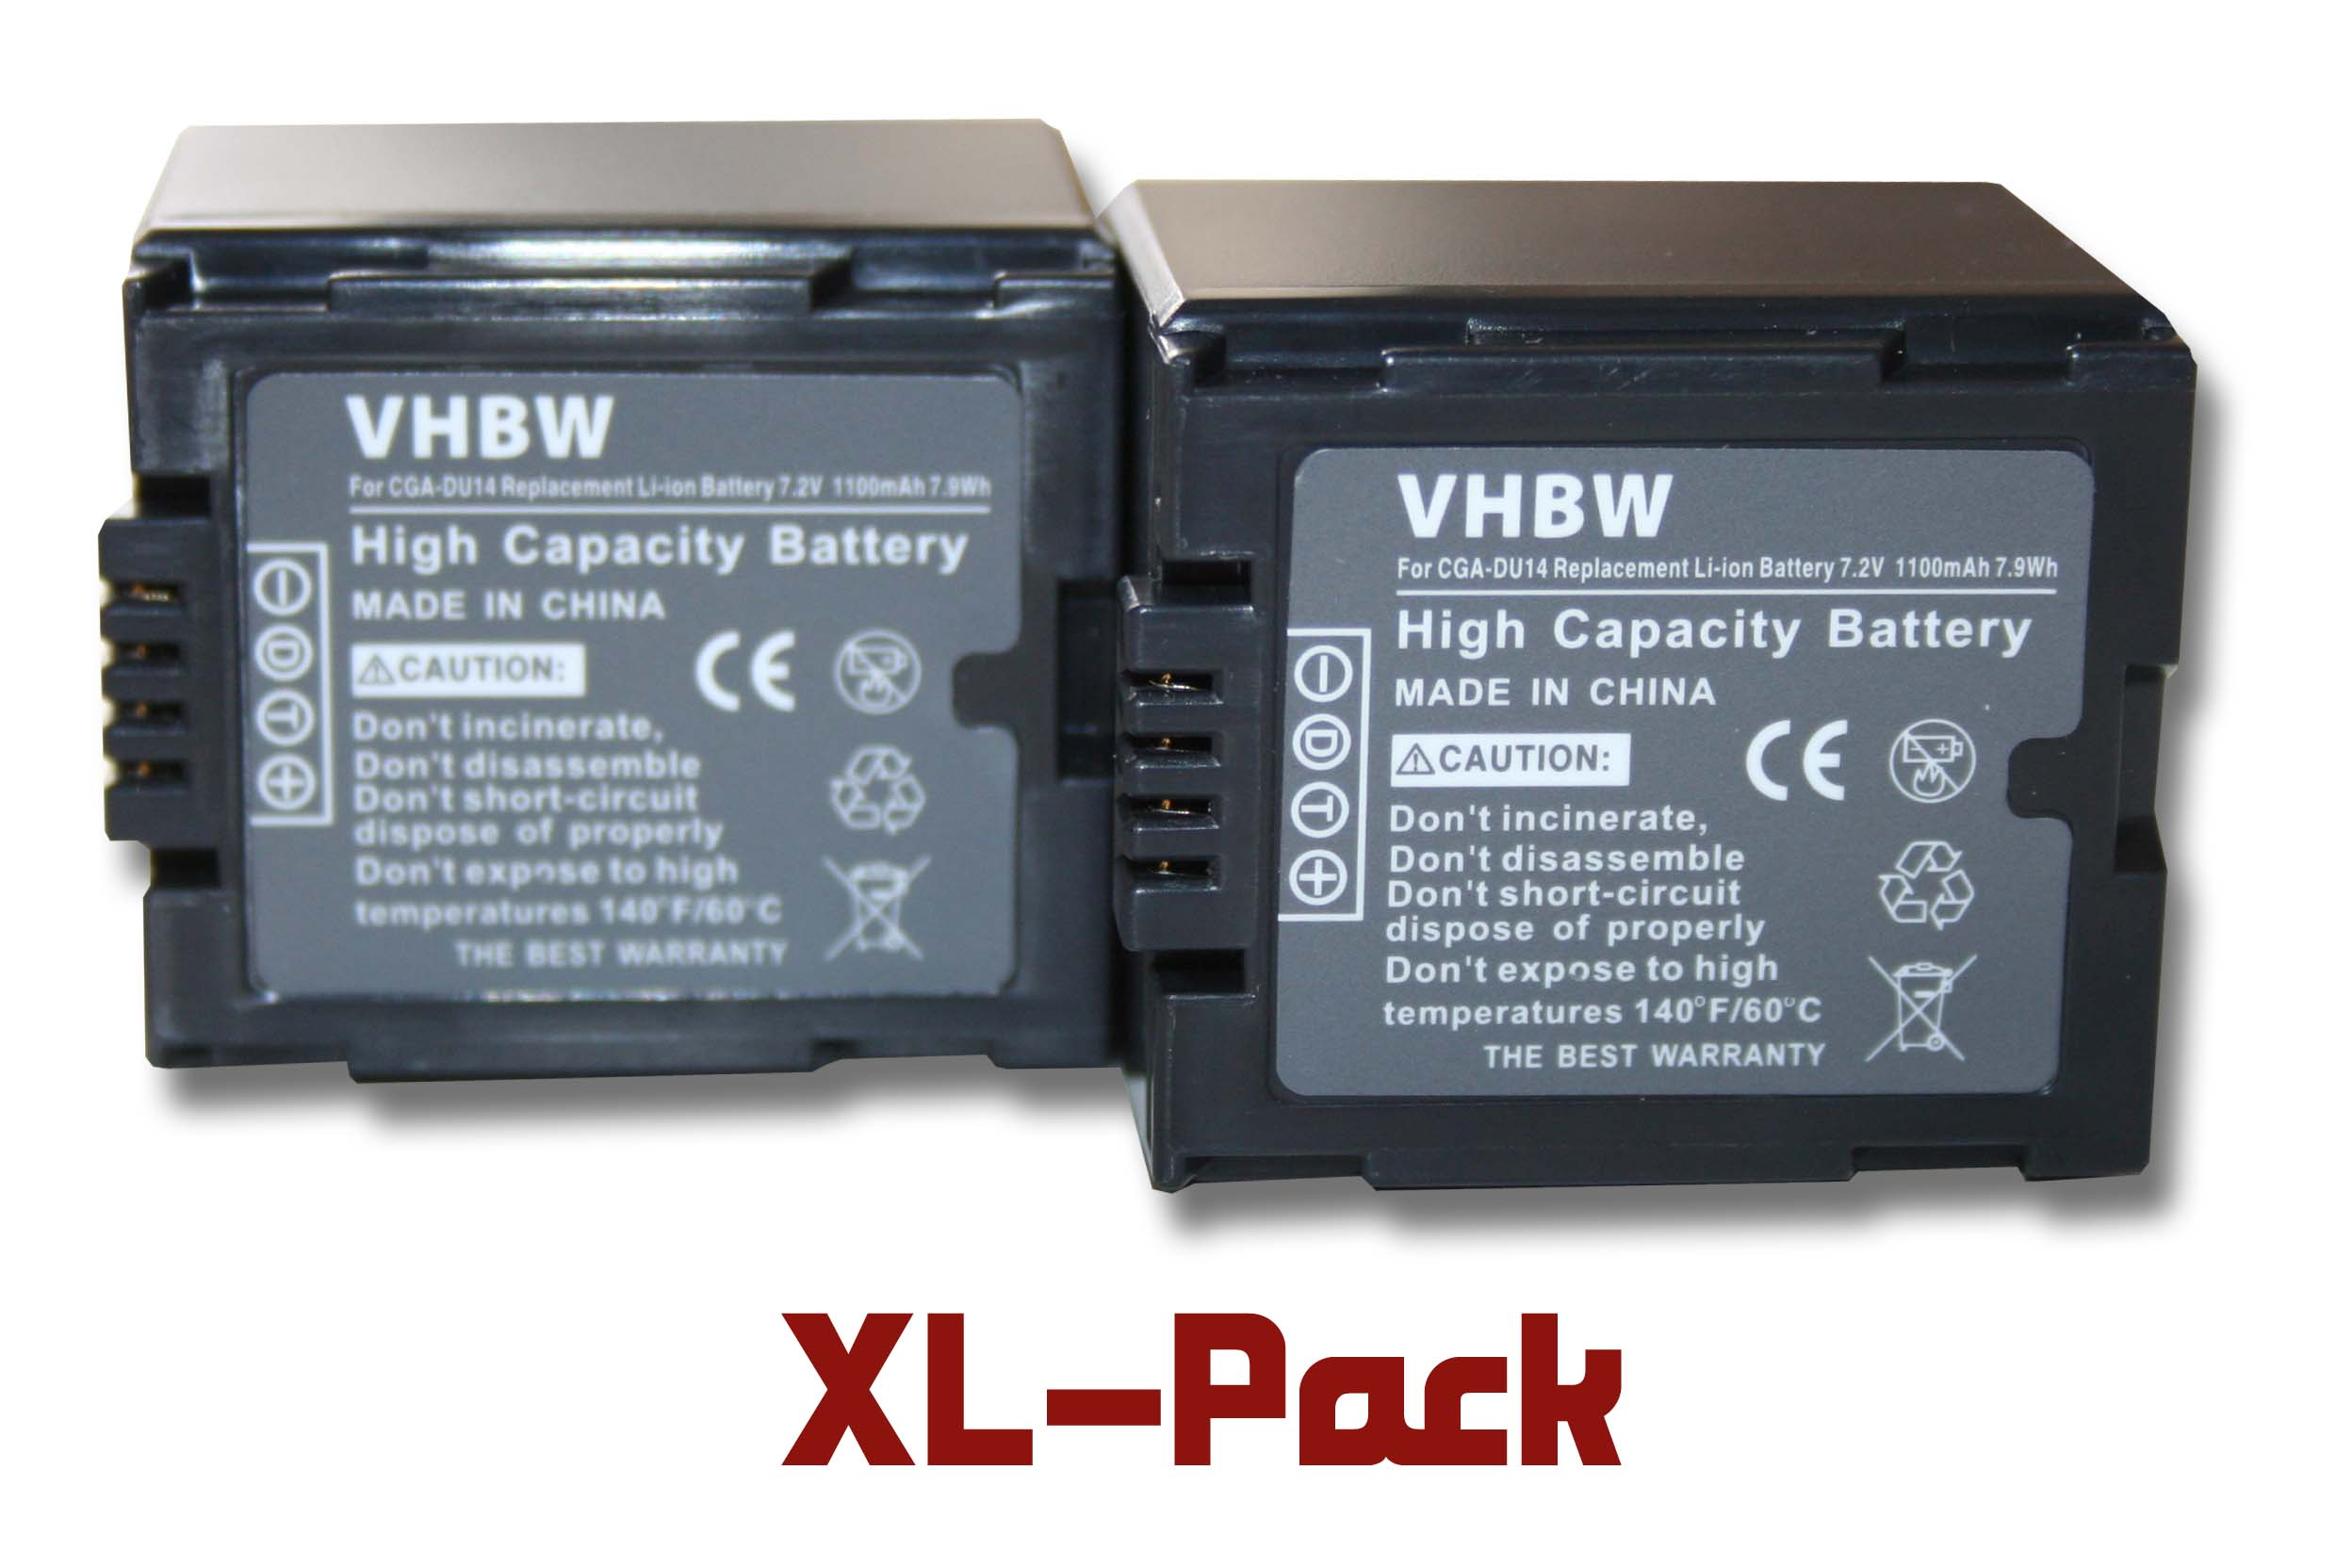 VHBW PV-GS120, Volt, 1100 PV-GS200 PV-GS50, Videokamera, Li-Ion mit kompatibel - Akku PV-GS50S, Panasonic NV-GS80, NV-GS75EG, 7.2